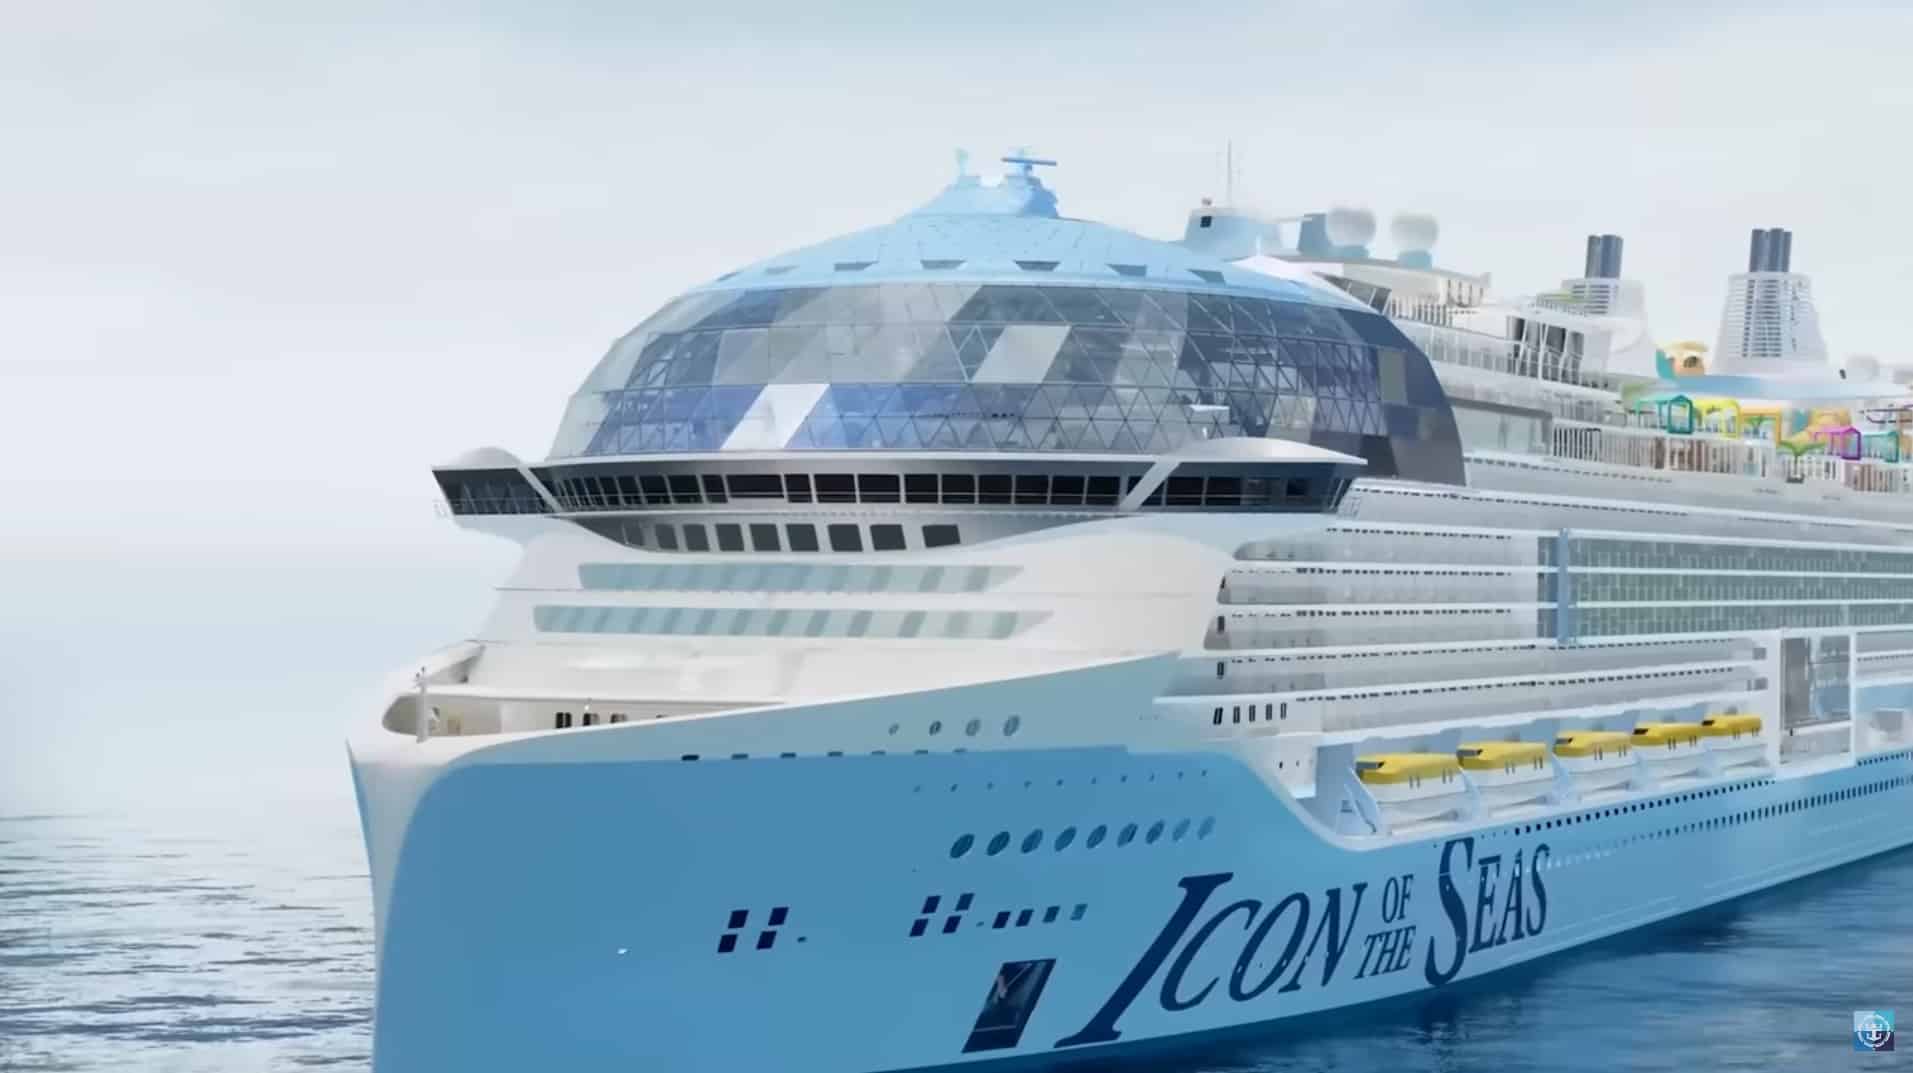 Royal Caribbean's Icon of the Seas cruise ship